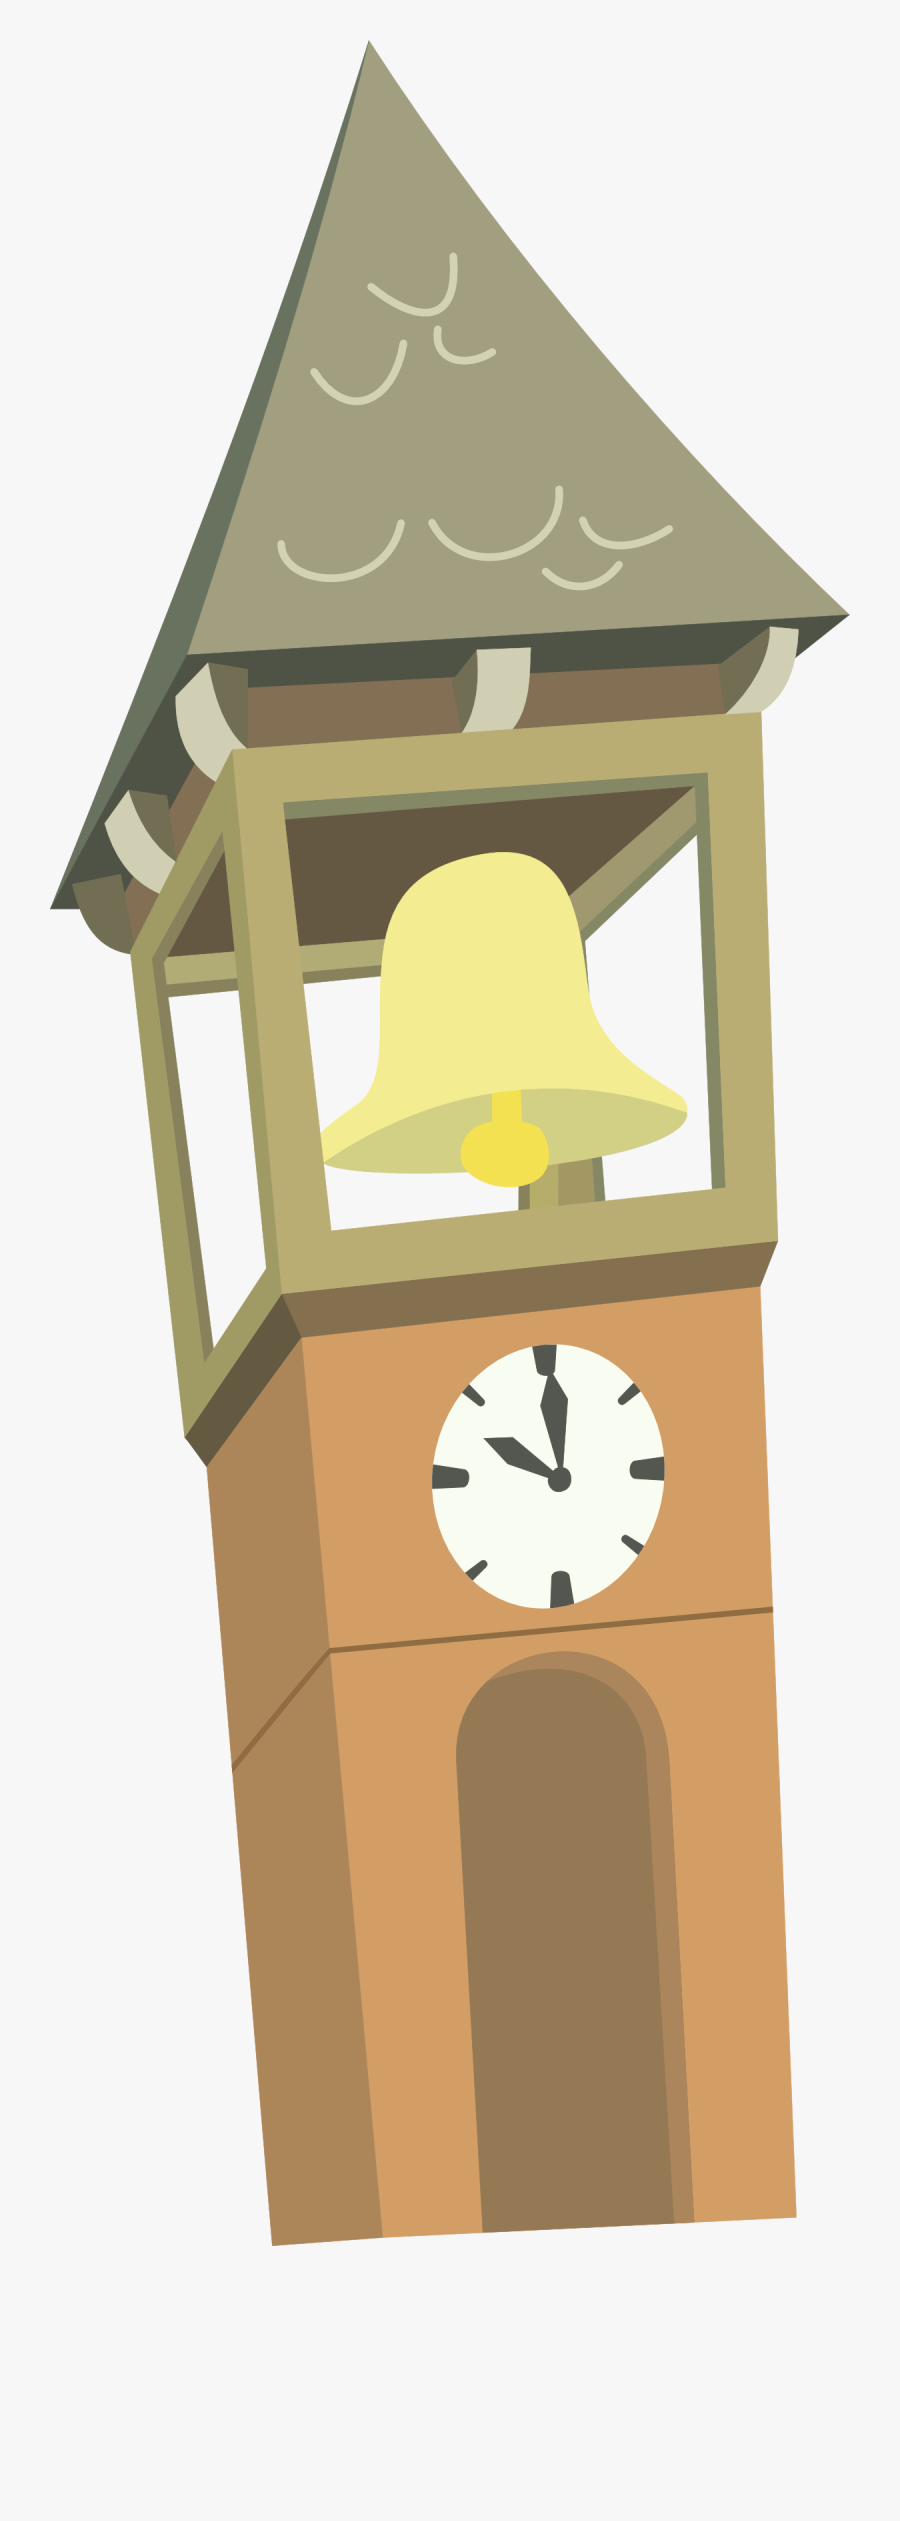 Images Of Big Ben - Cartoon Clock Tower Png, Transparent Clipart